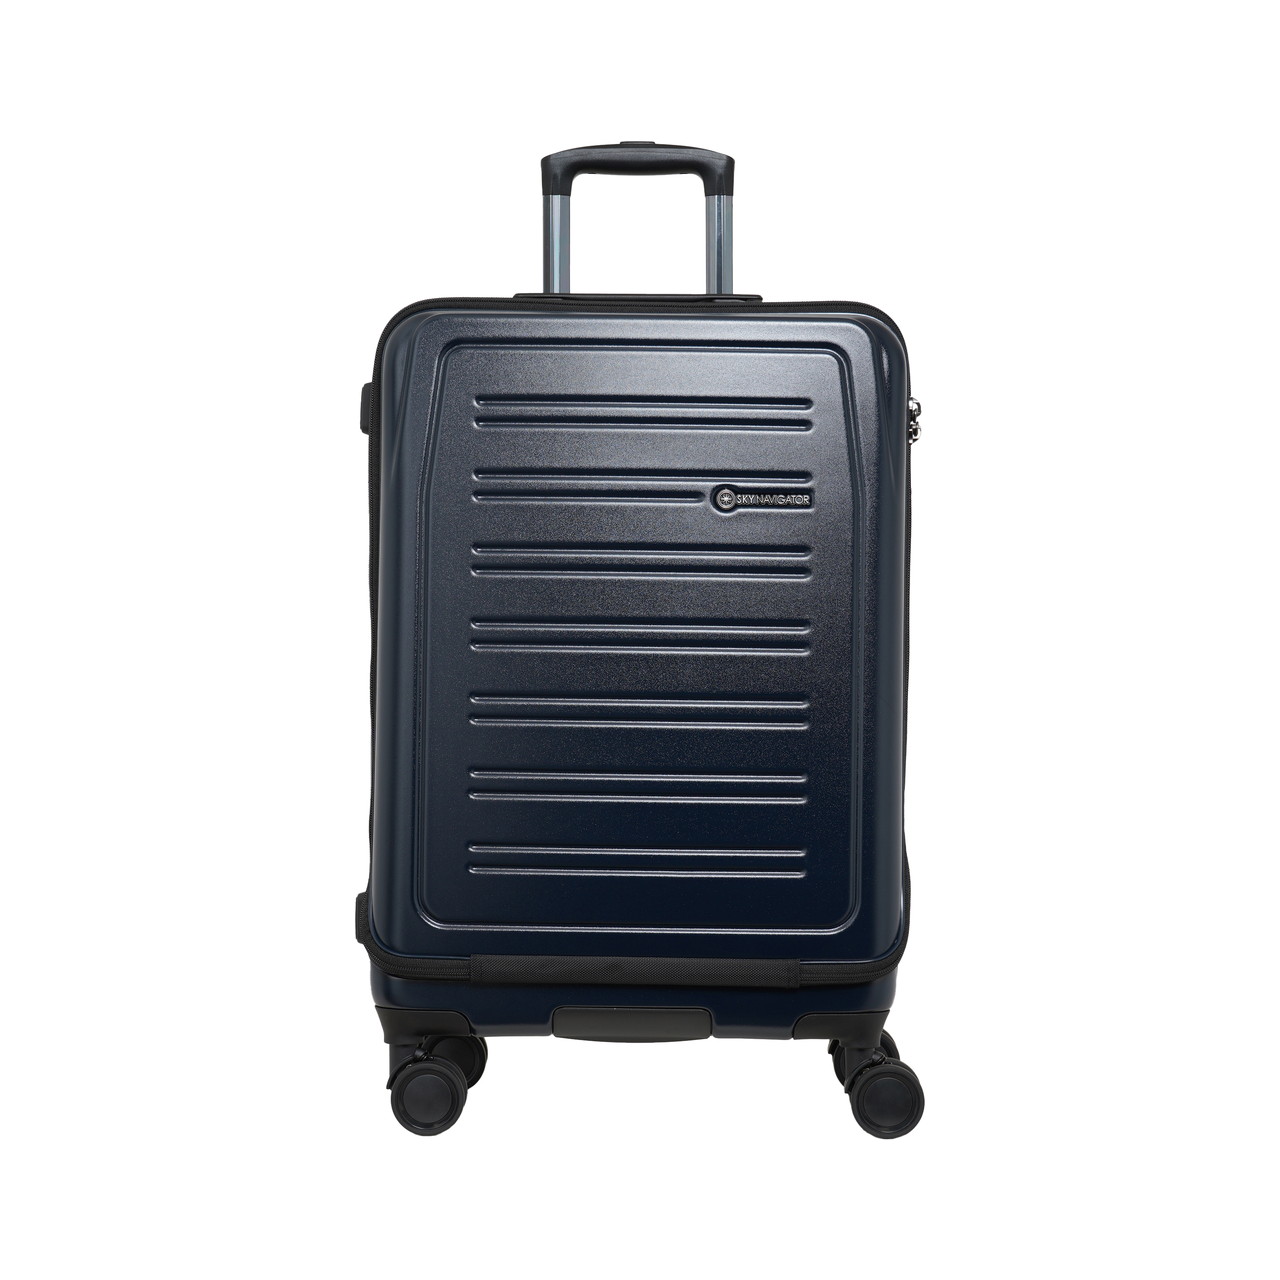 SKYNAVIGATORのスーツケースSK-0839-56の正面画像